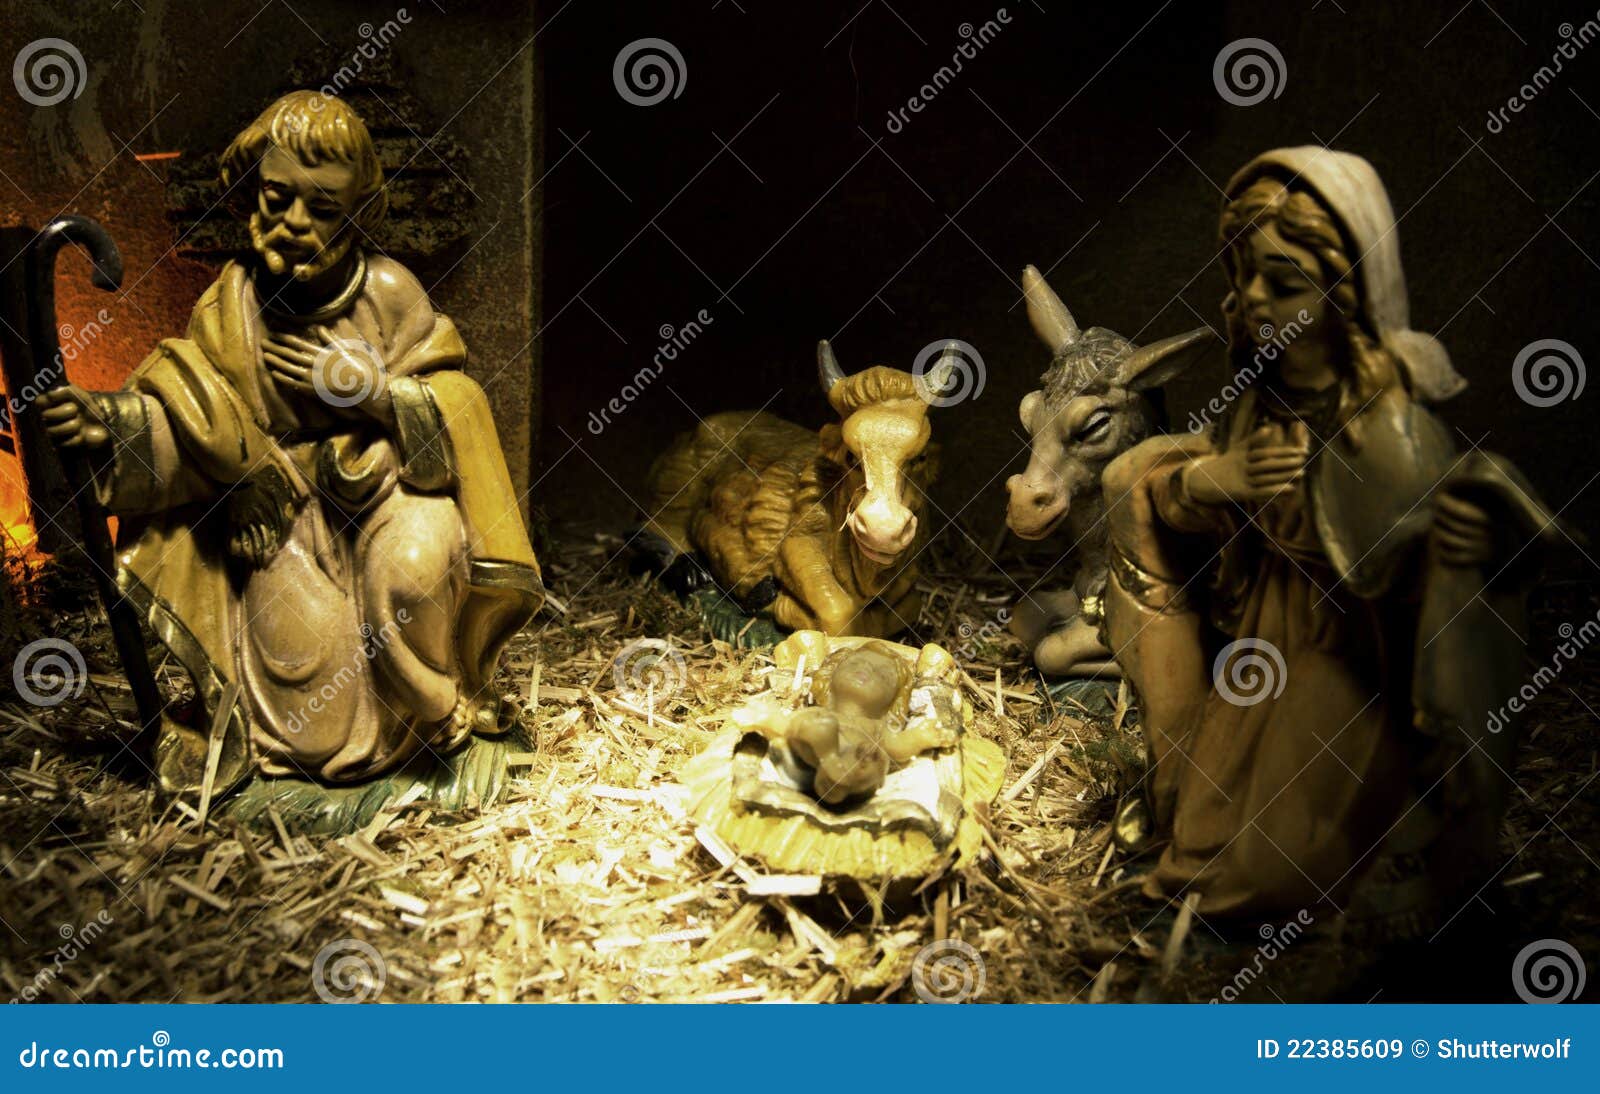 representation of nativity